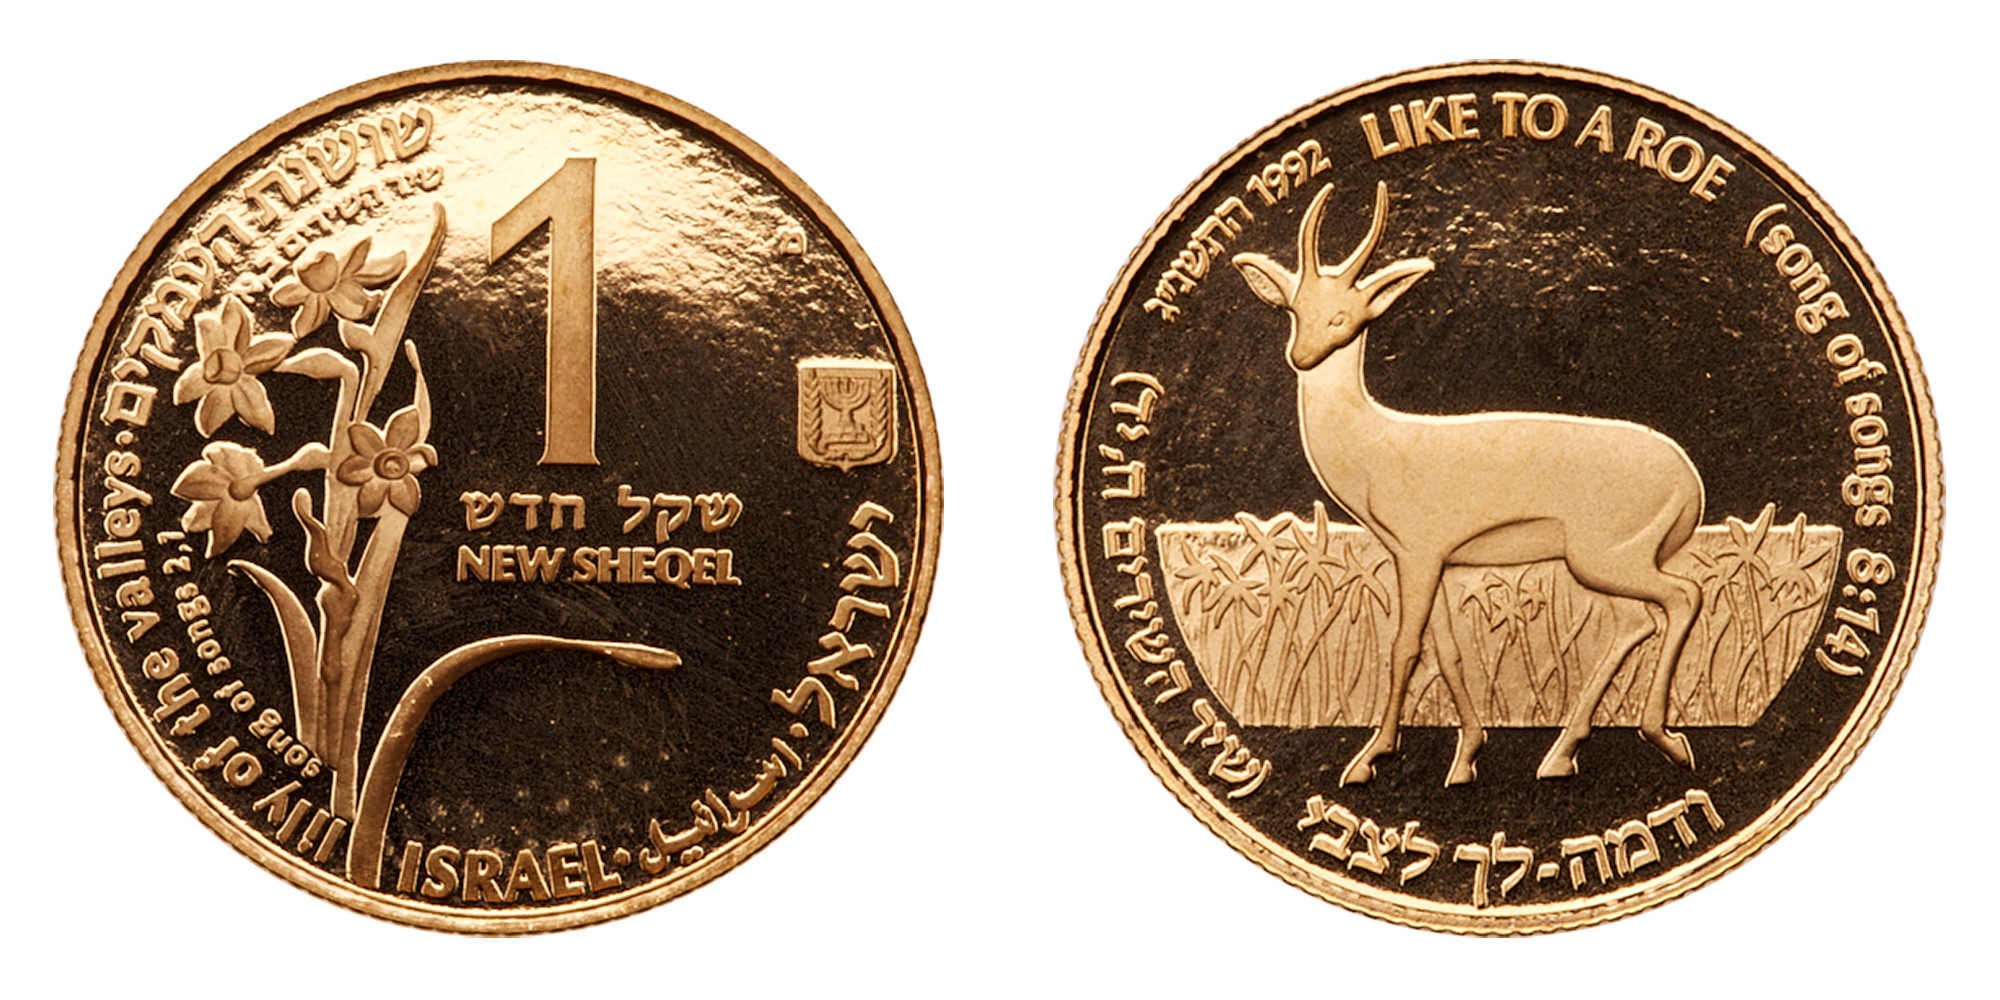 Israel. 1 New Sheqel, 1992. PF